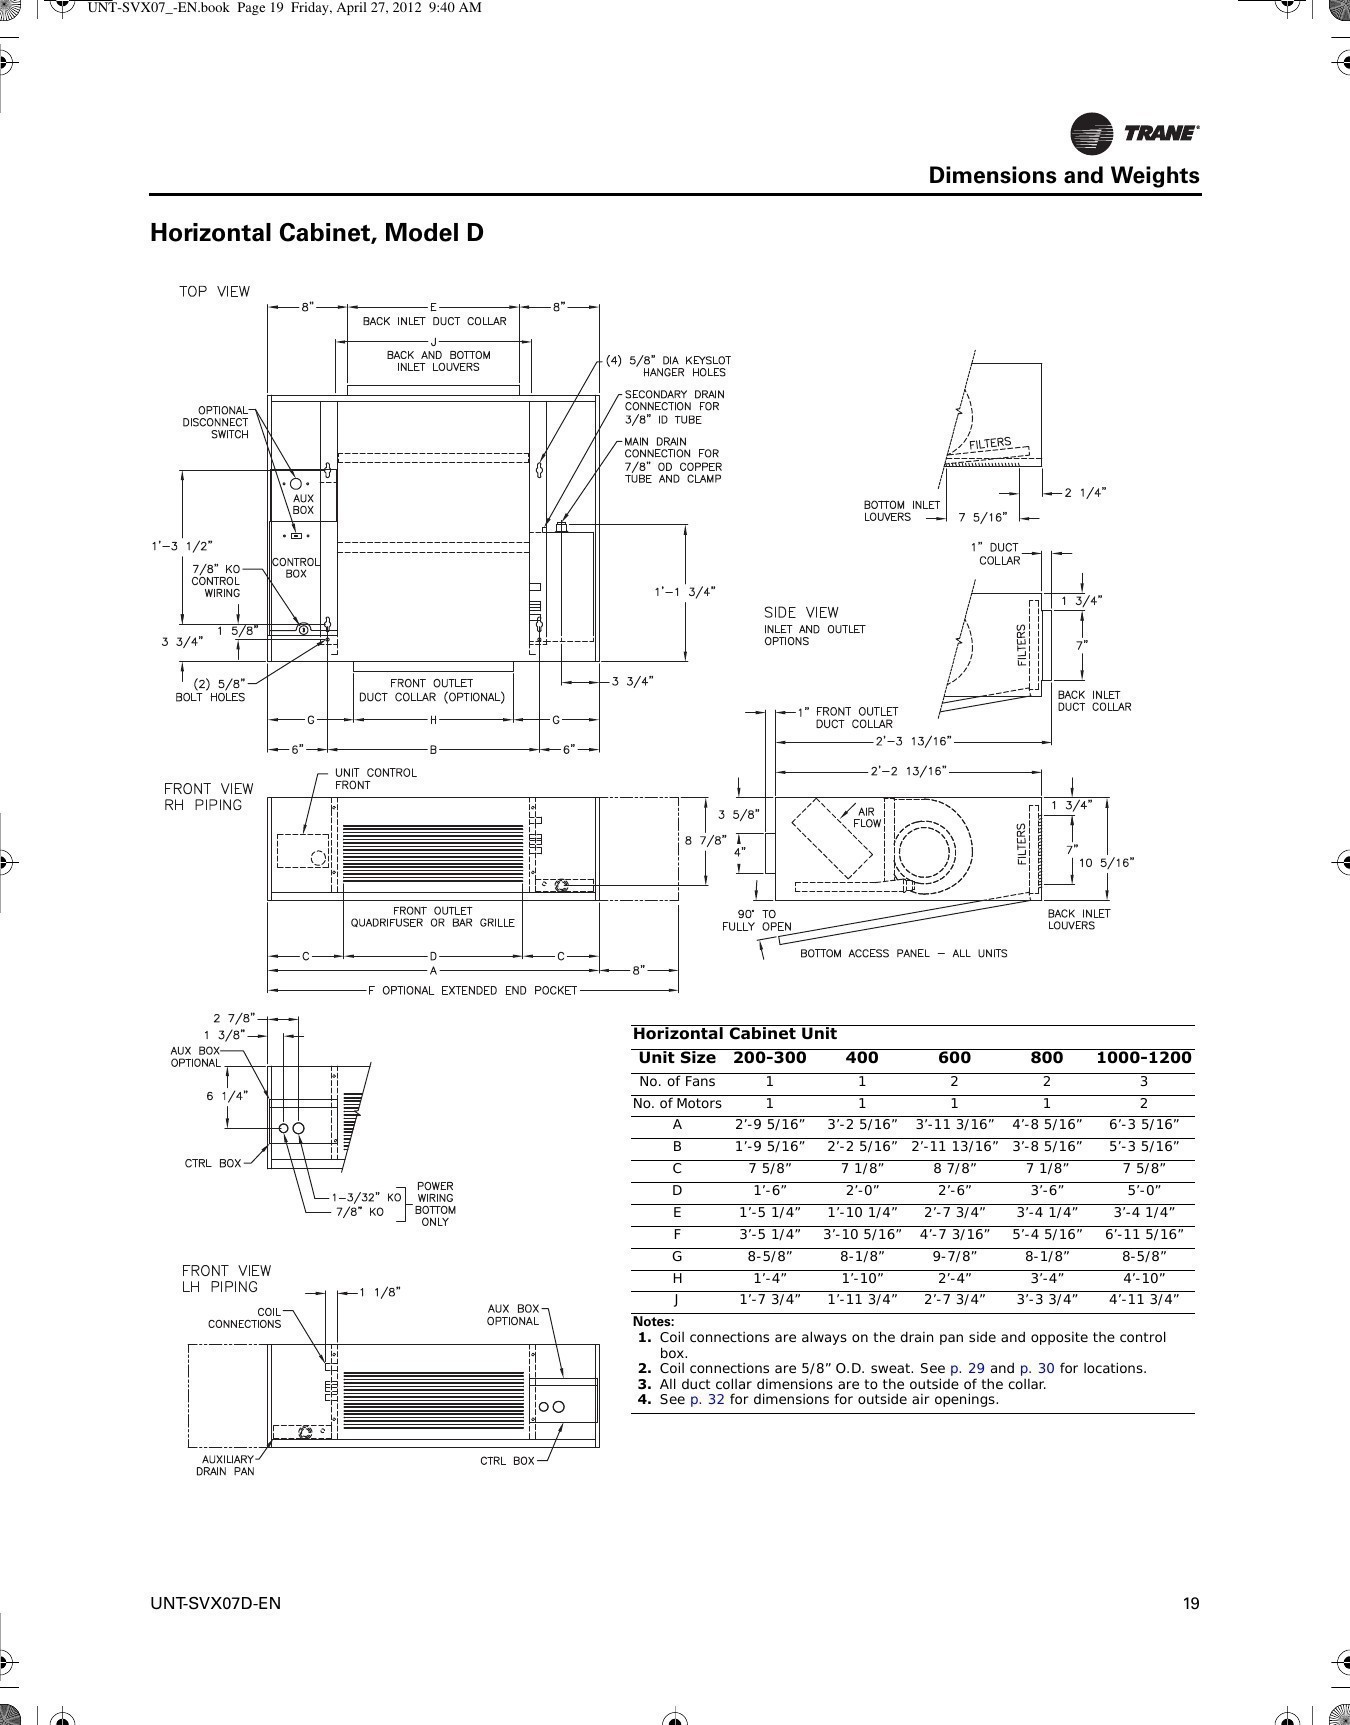 Ac Wiring Diagram thermostat Ruud Ac Wiring Diagram Unique Rudd Ac Wiring Diagram Wiring Diagram Of Ac Wiring Diagram thermostat